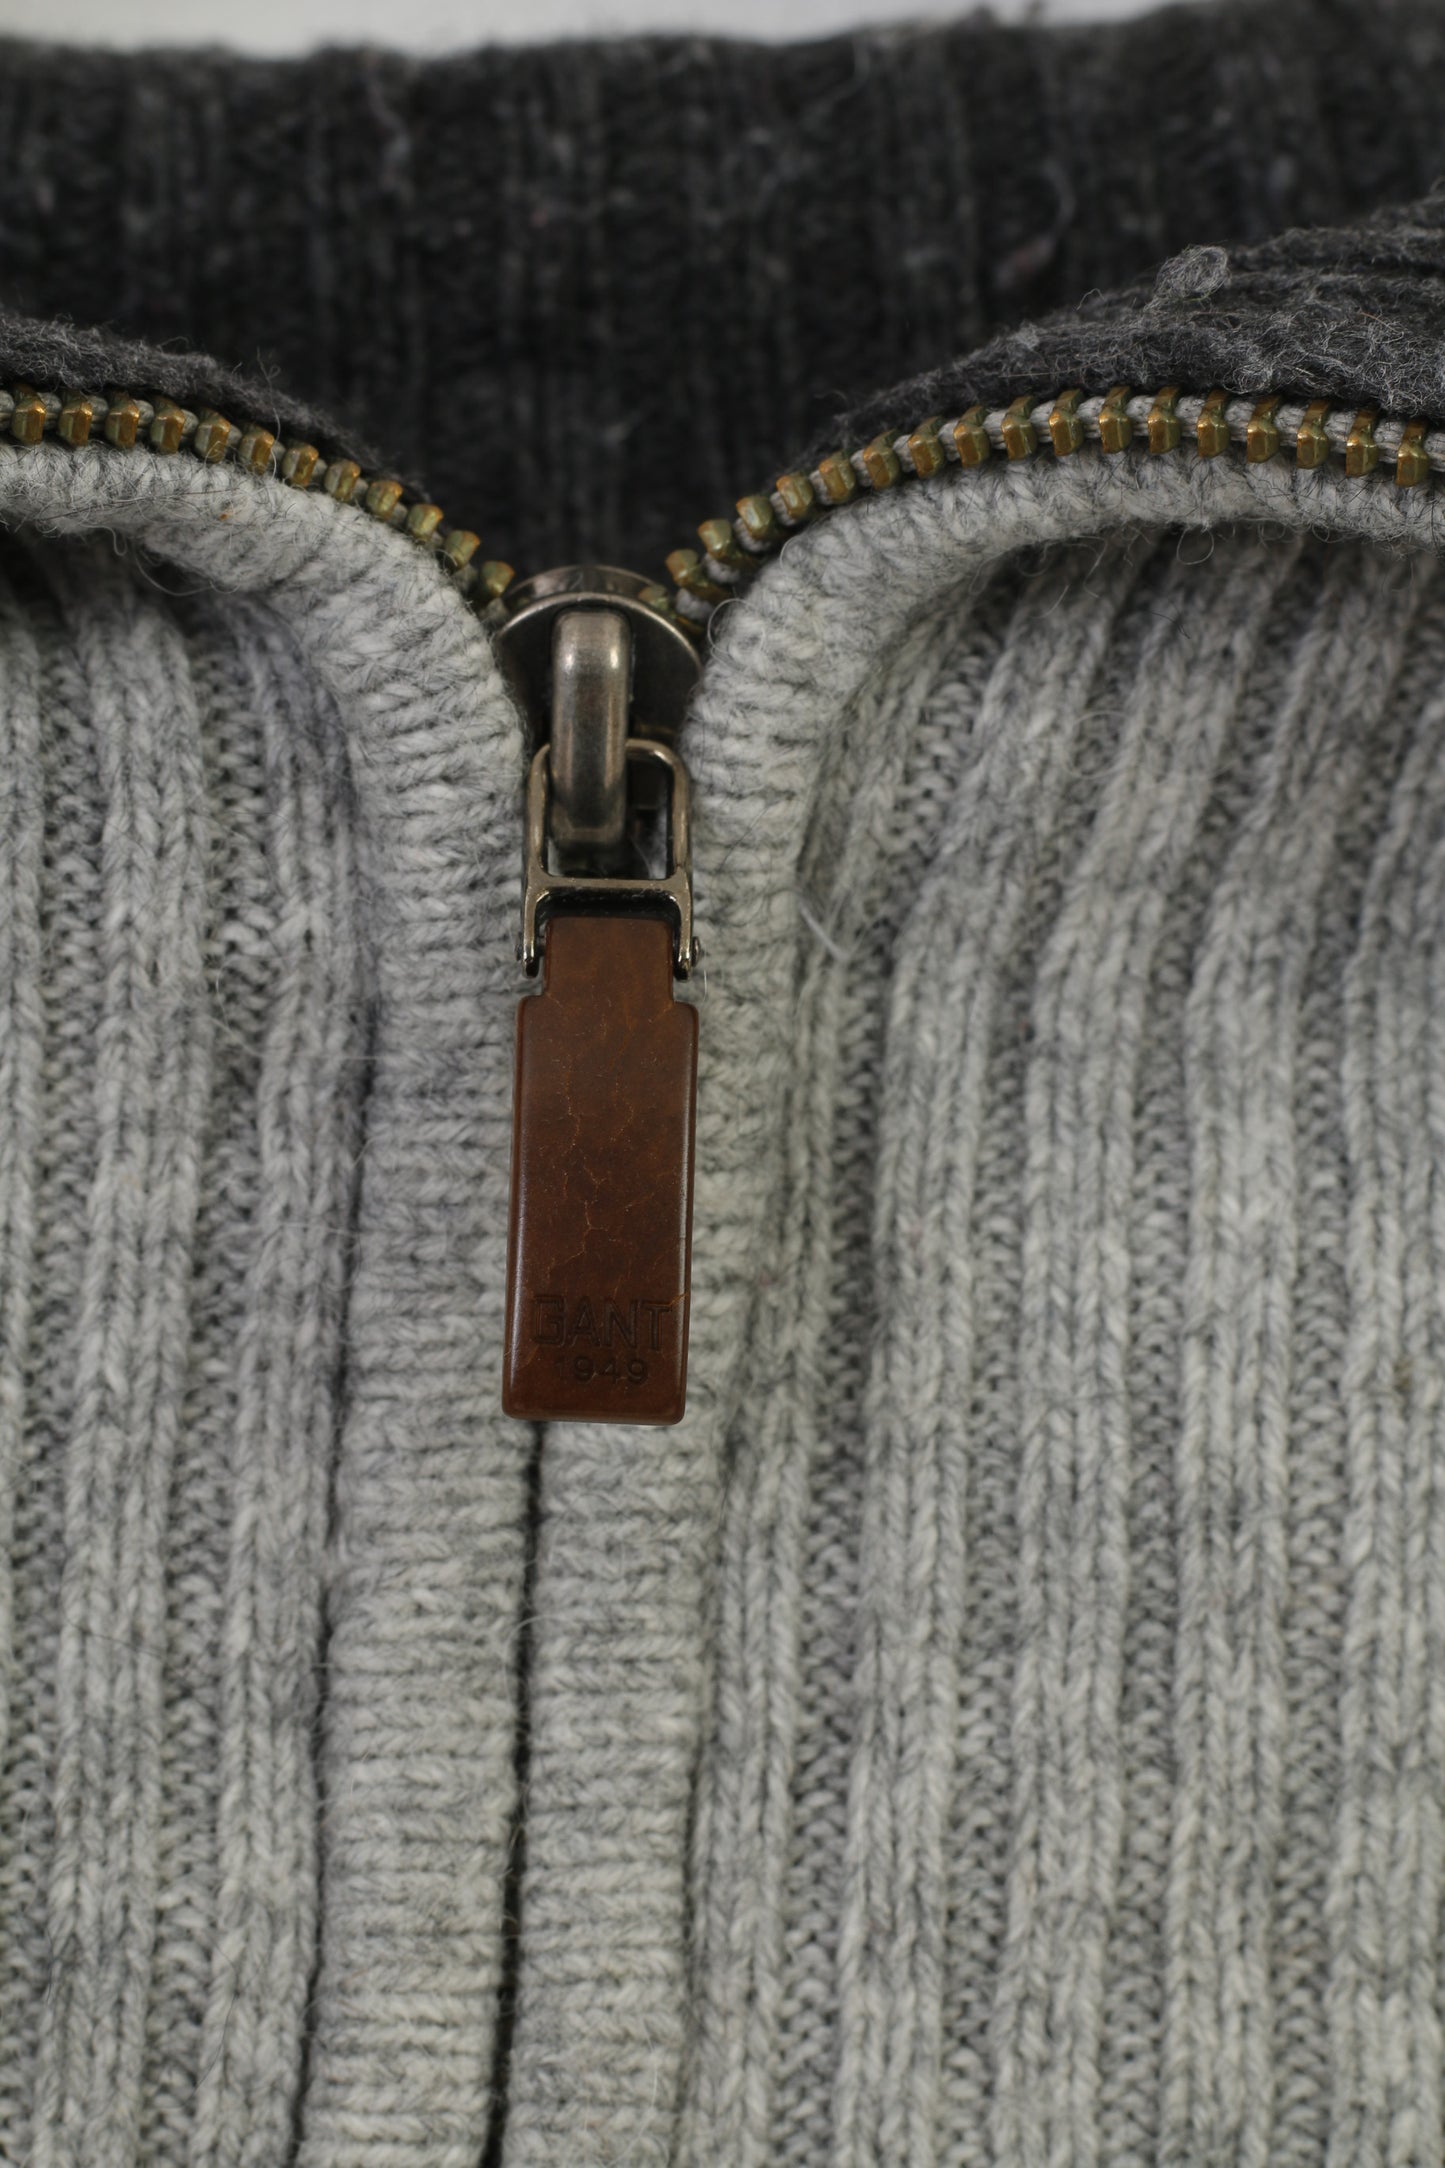 Gant Men XL Jumper Grey Cotton Wool Blend Soft Sweater Zip Neck Collar Vintage Top